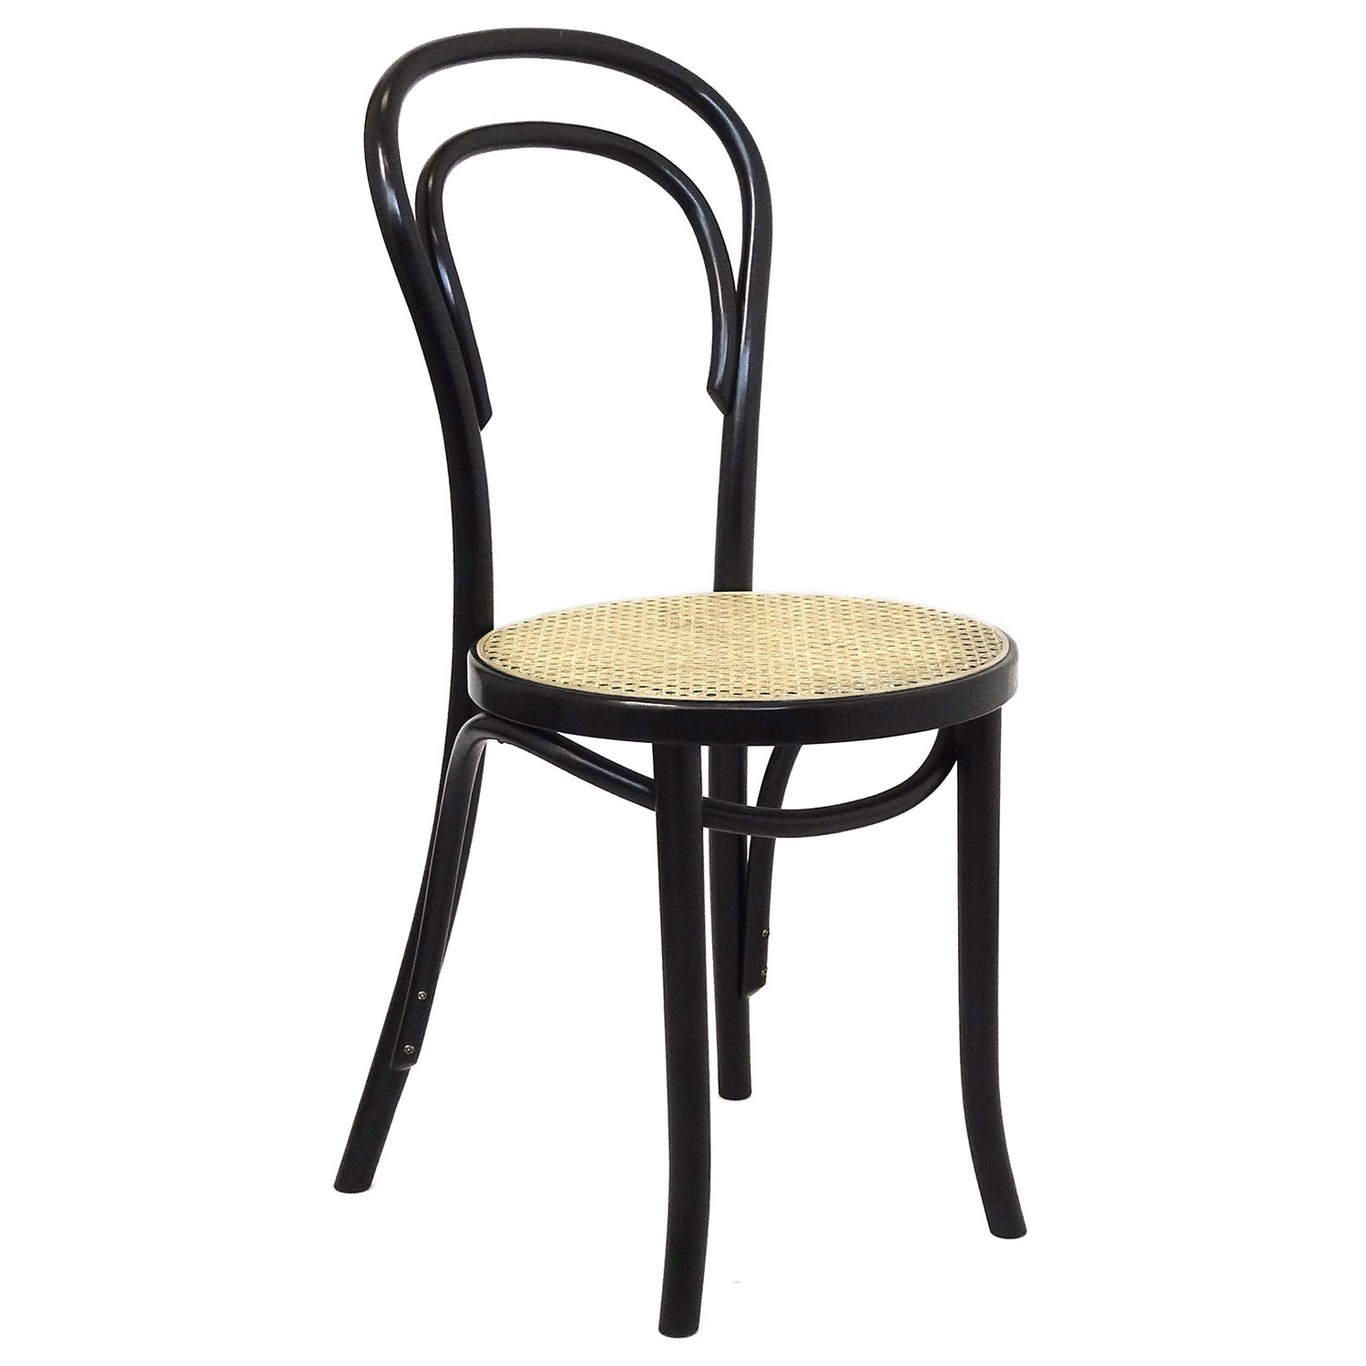 No 14 Café Chair, Black/Rattan Seat